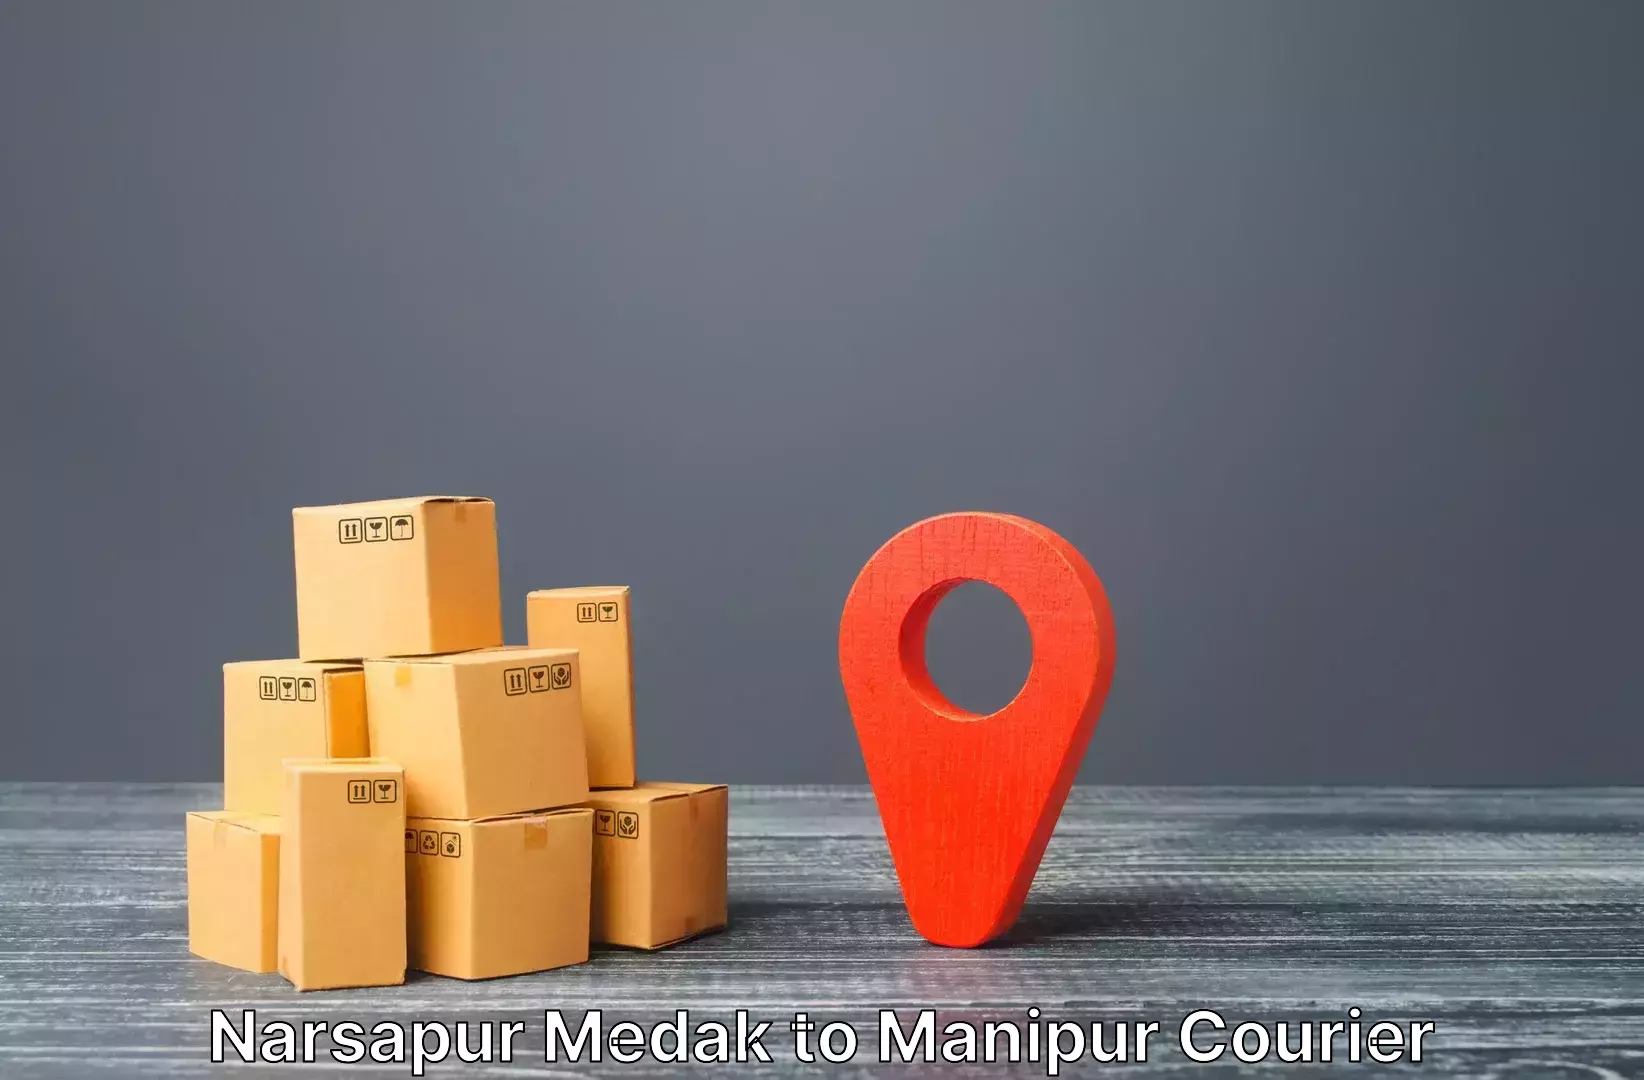 Luggage shipment specialists Narsapur Medak to Manipur